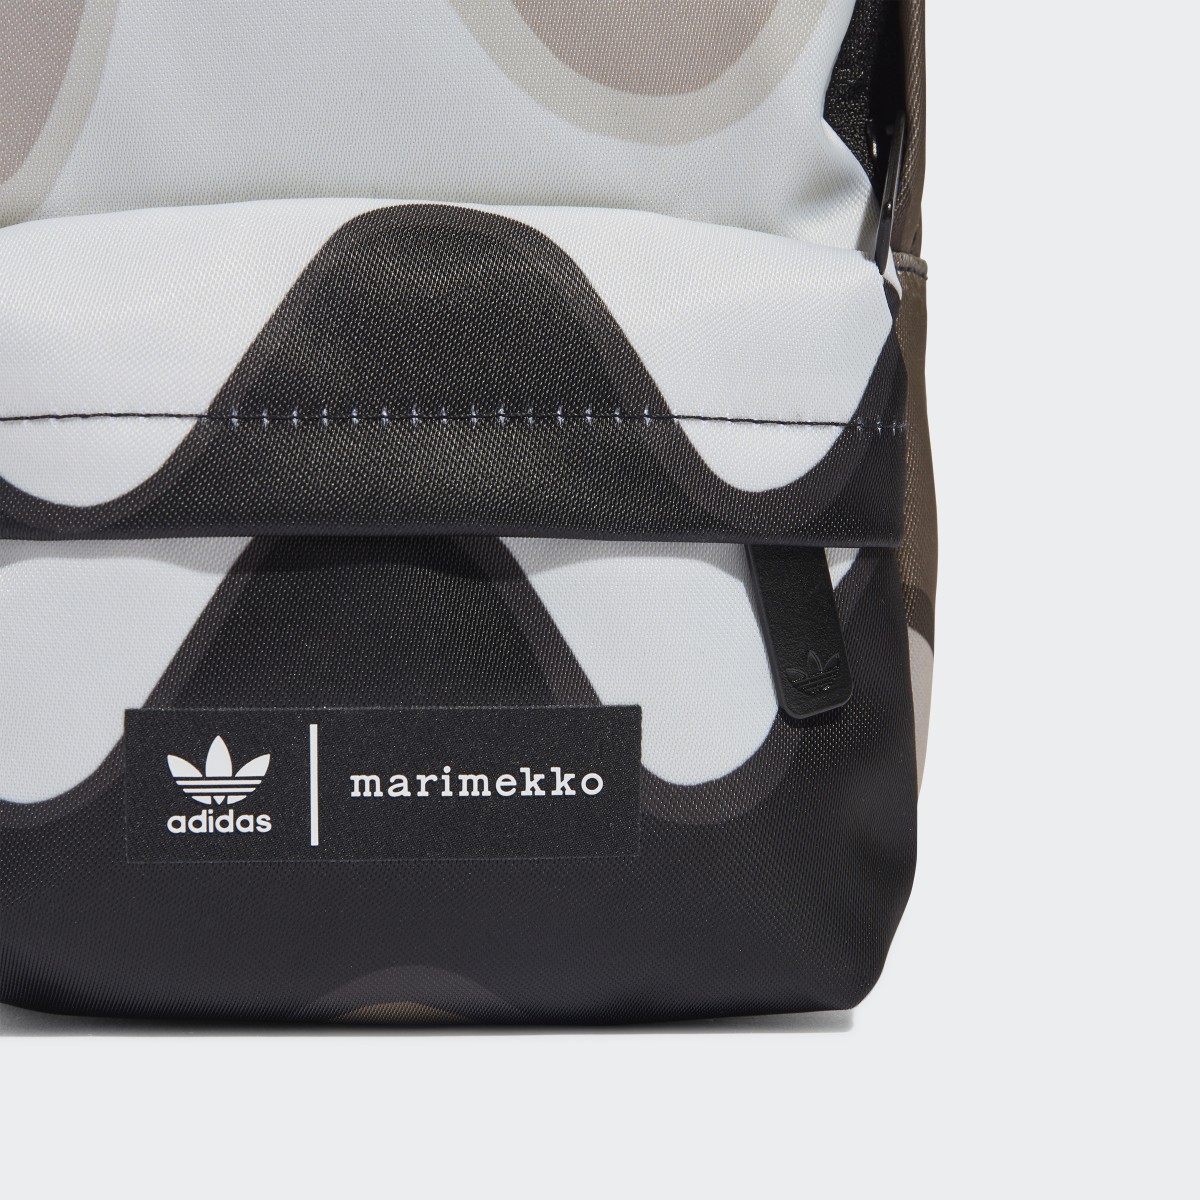 Adidas x Marimekko Mini Backpack. 6